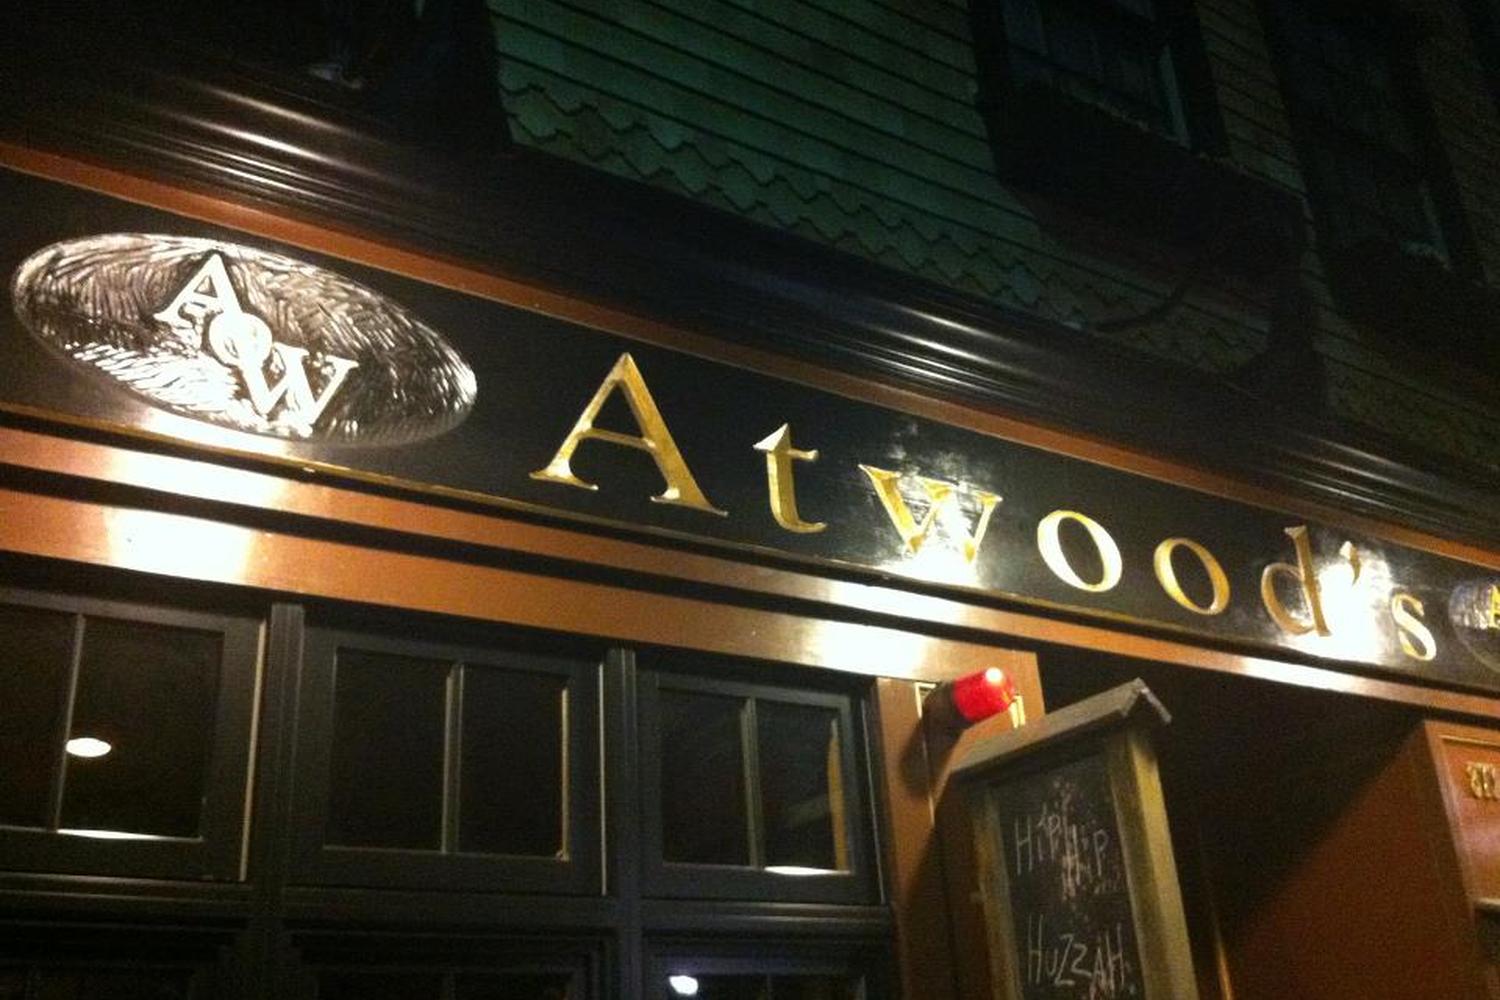 Atwood's Tavern